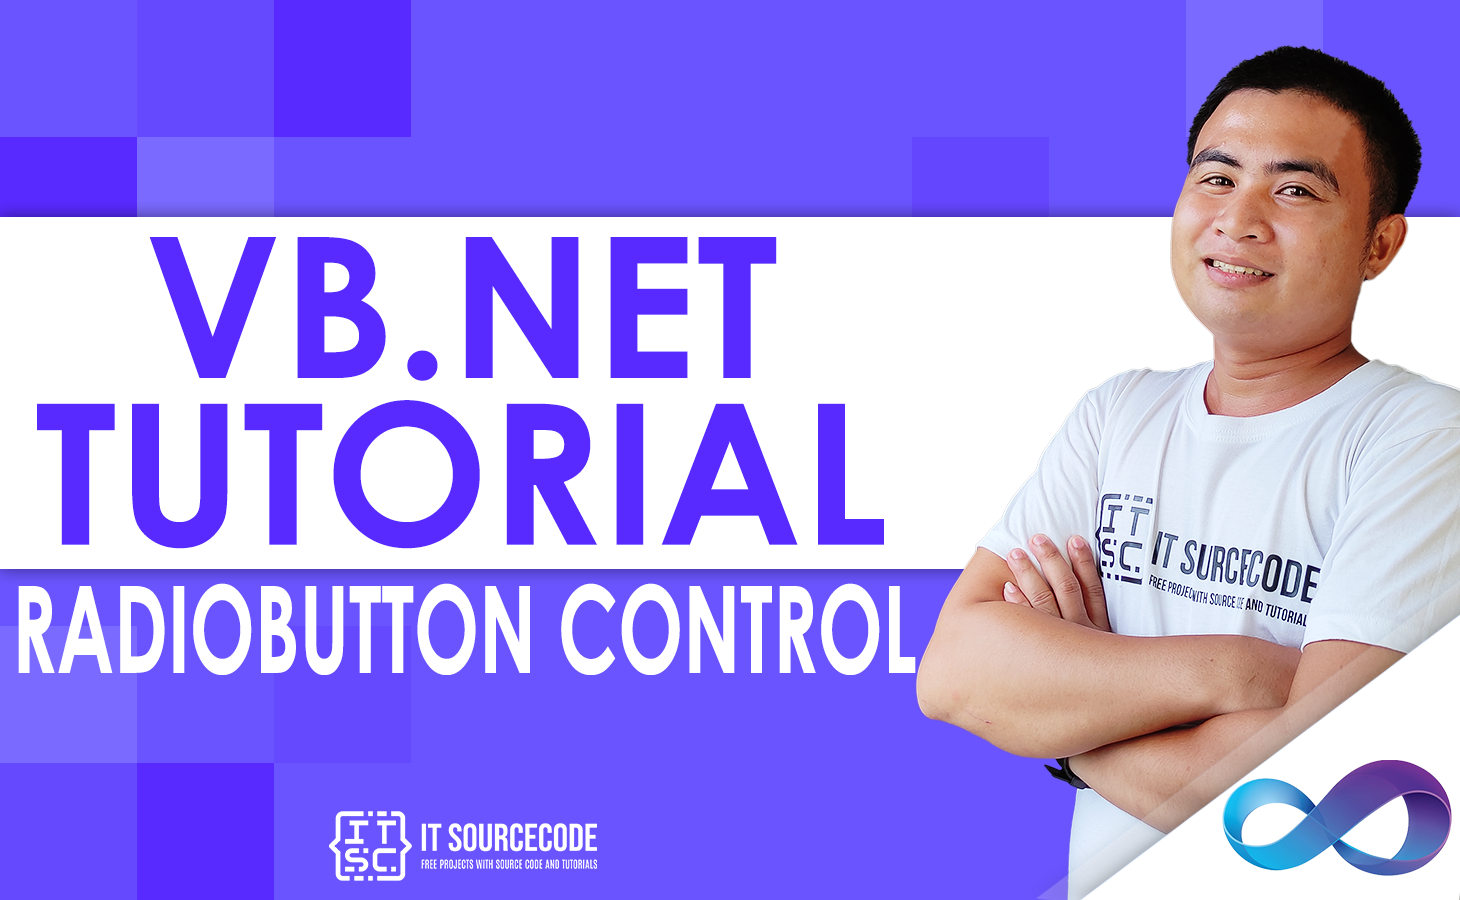 RadioButton Control in VB NET